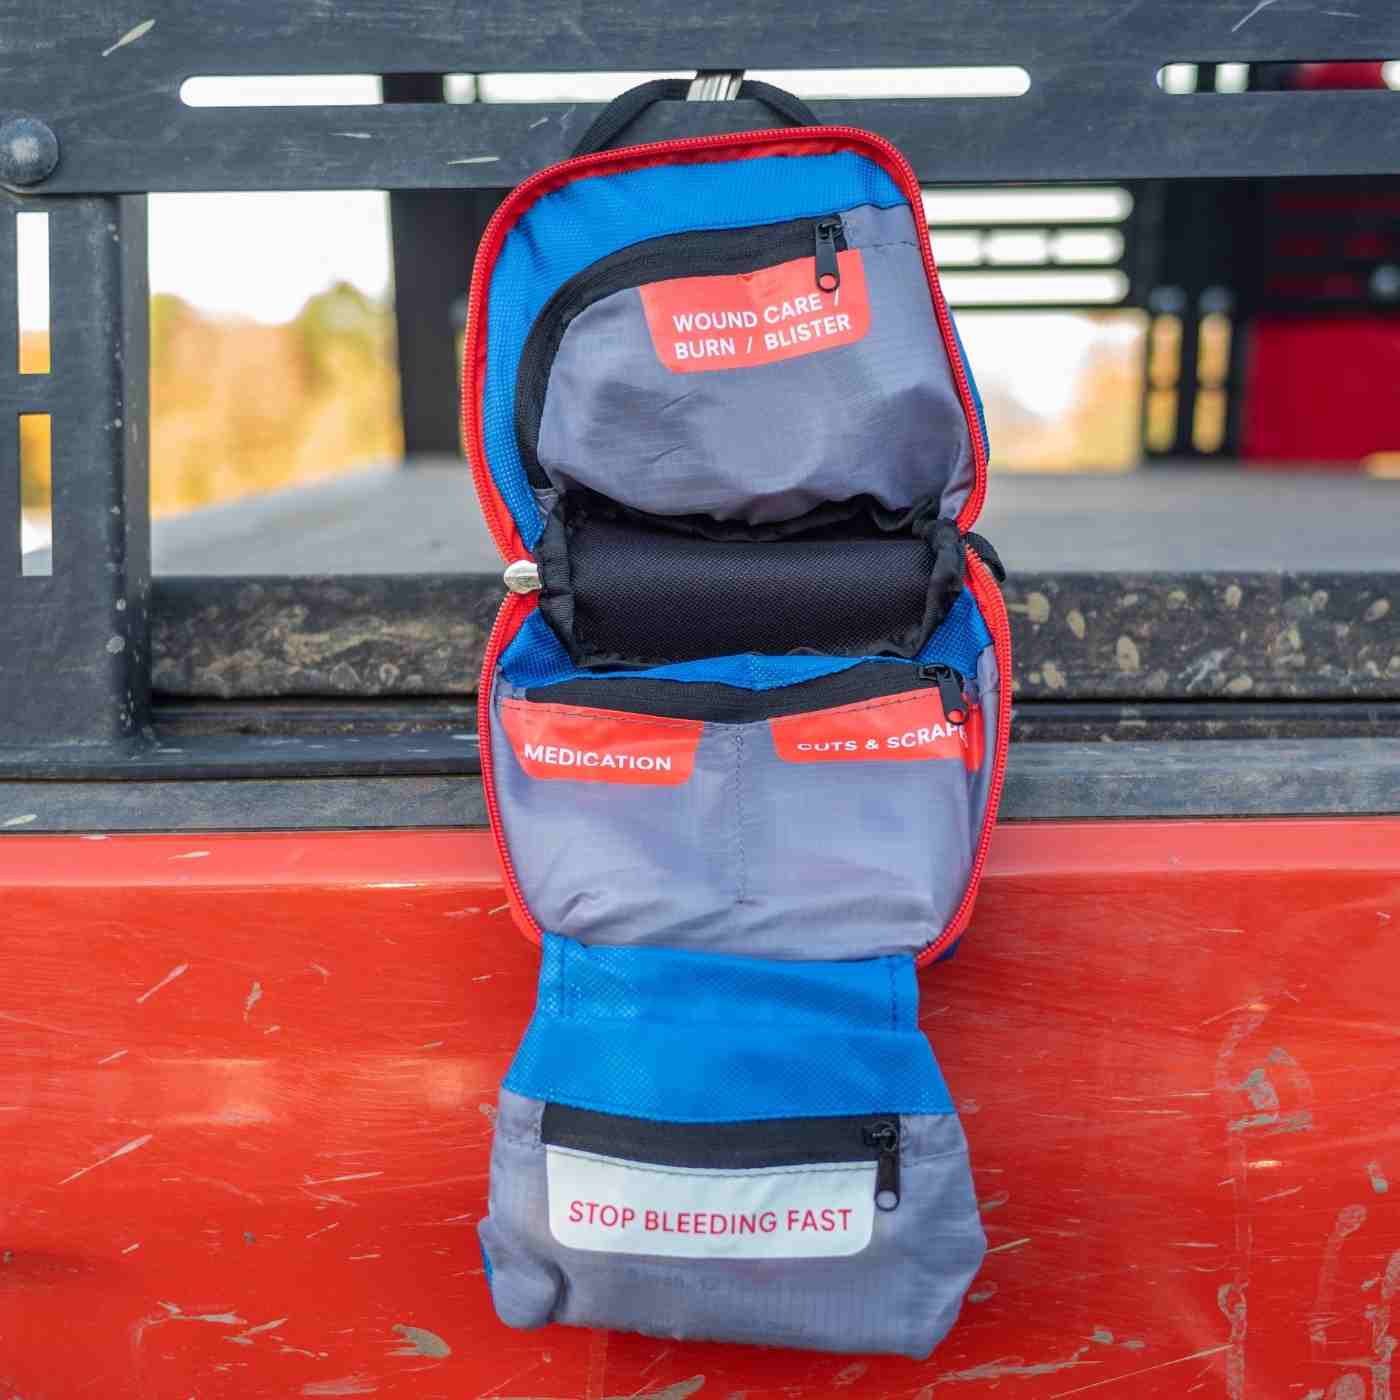 Mountain Series Medical Kit - Hiker kit opened hanging on red truck